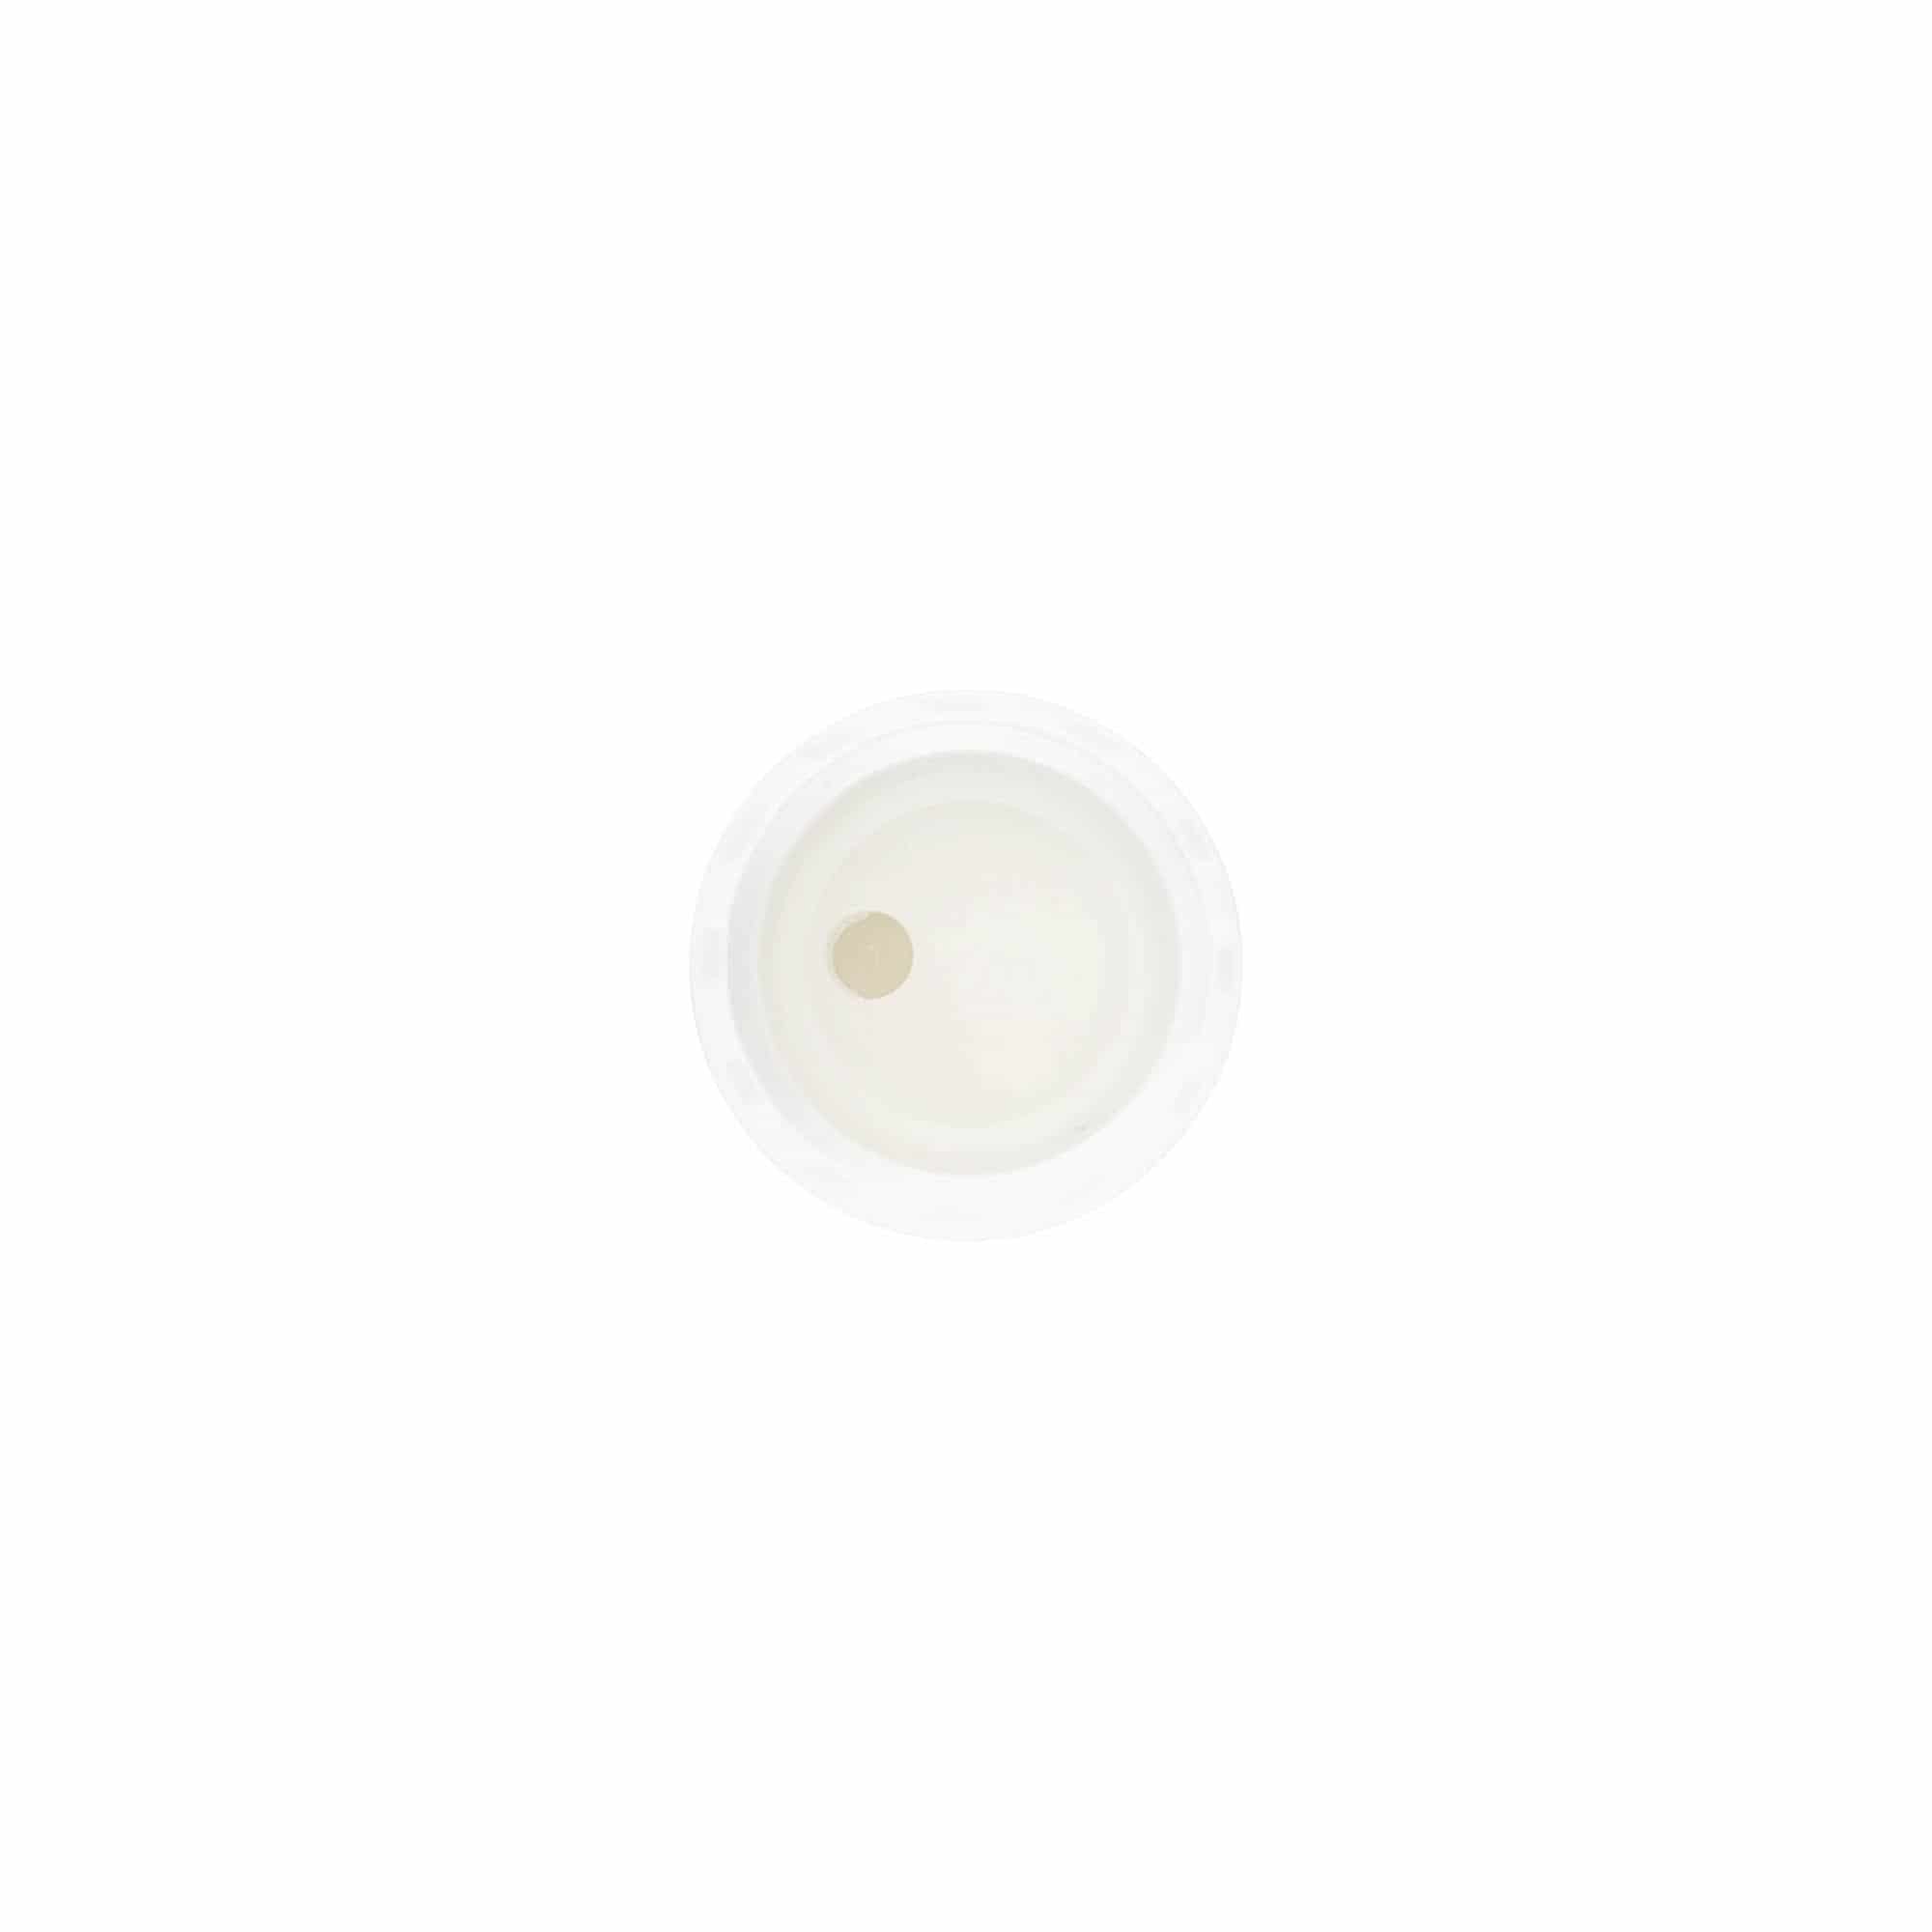 Tapón de rosca 'Disc Top', plástico de PP, blanco, para boca: GPI 20/410